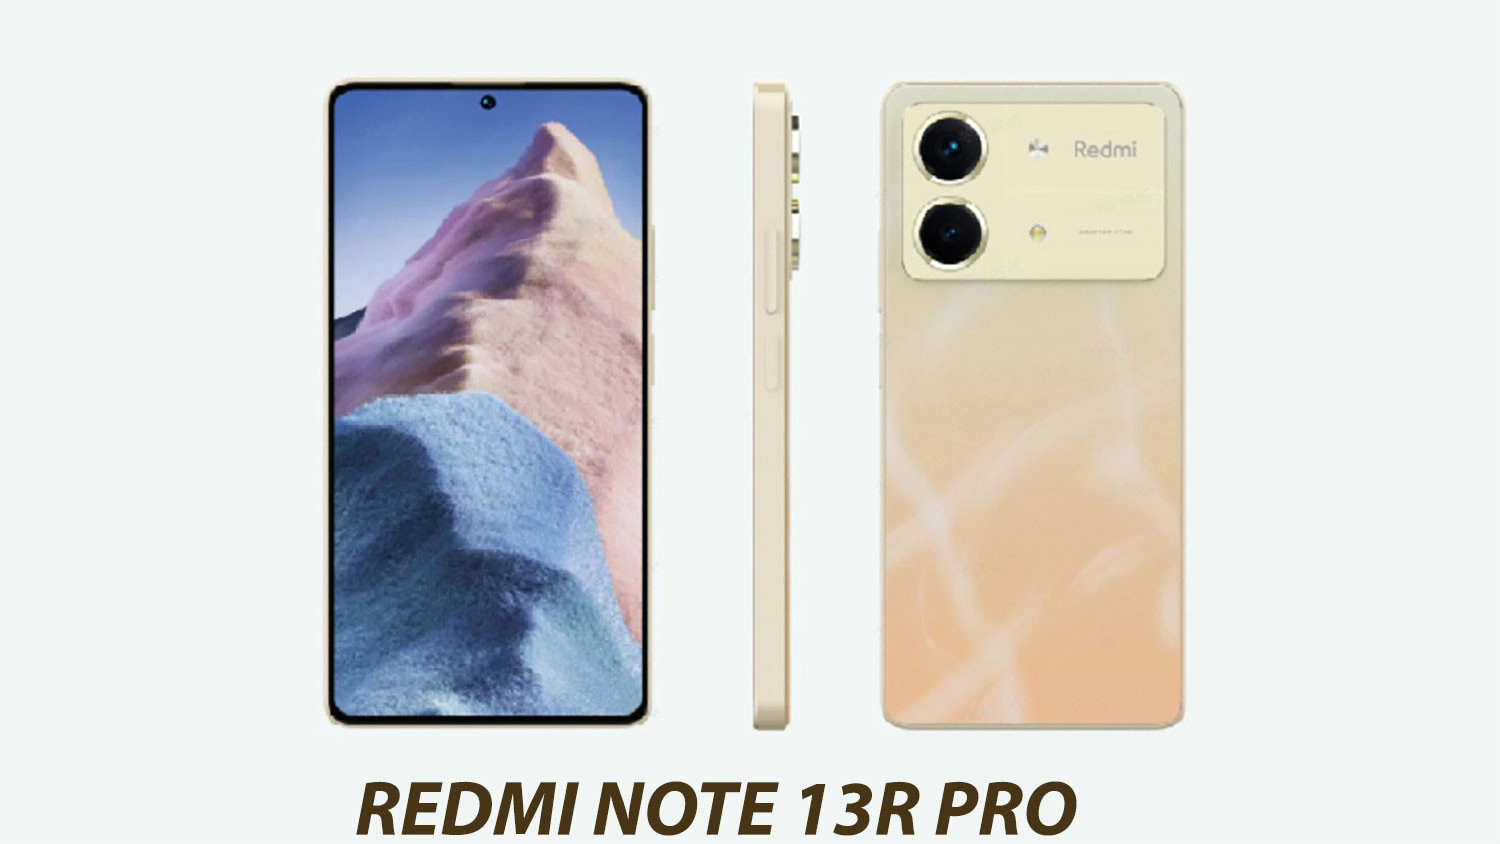  redmi-note13r-pro-ra-mat1